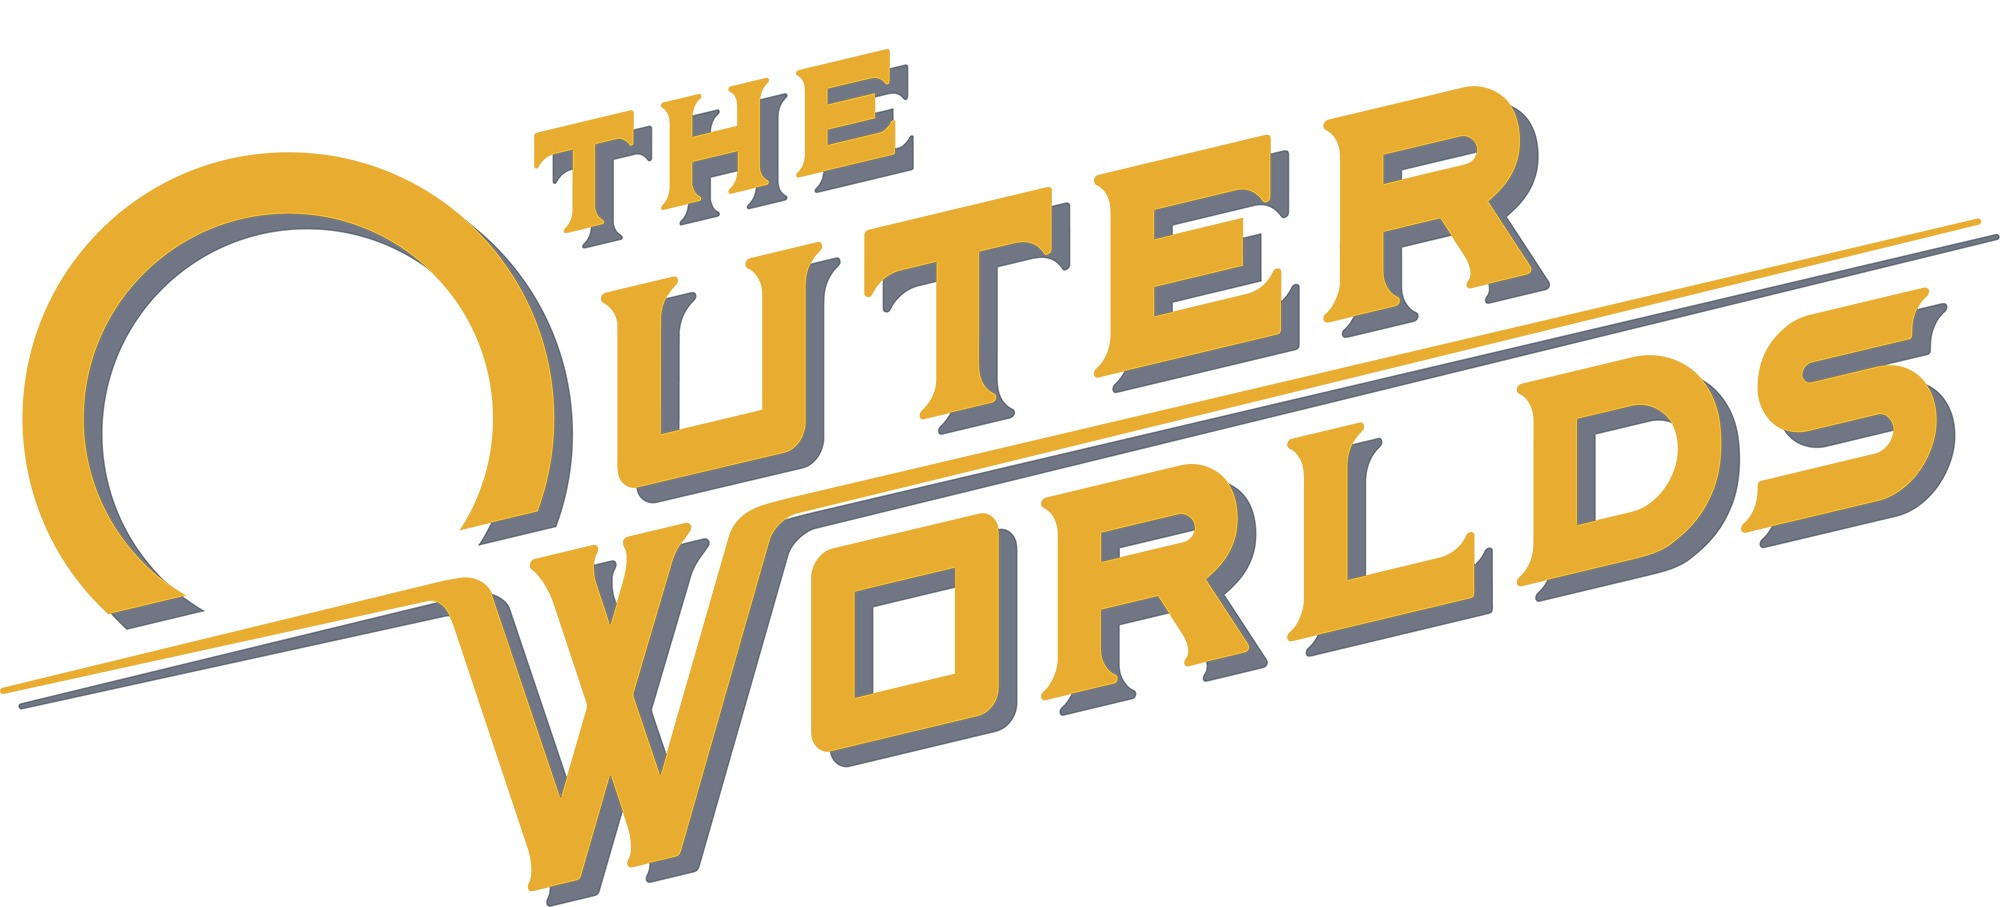 Logo de The Outer Worlds